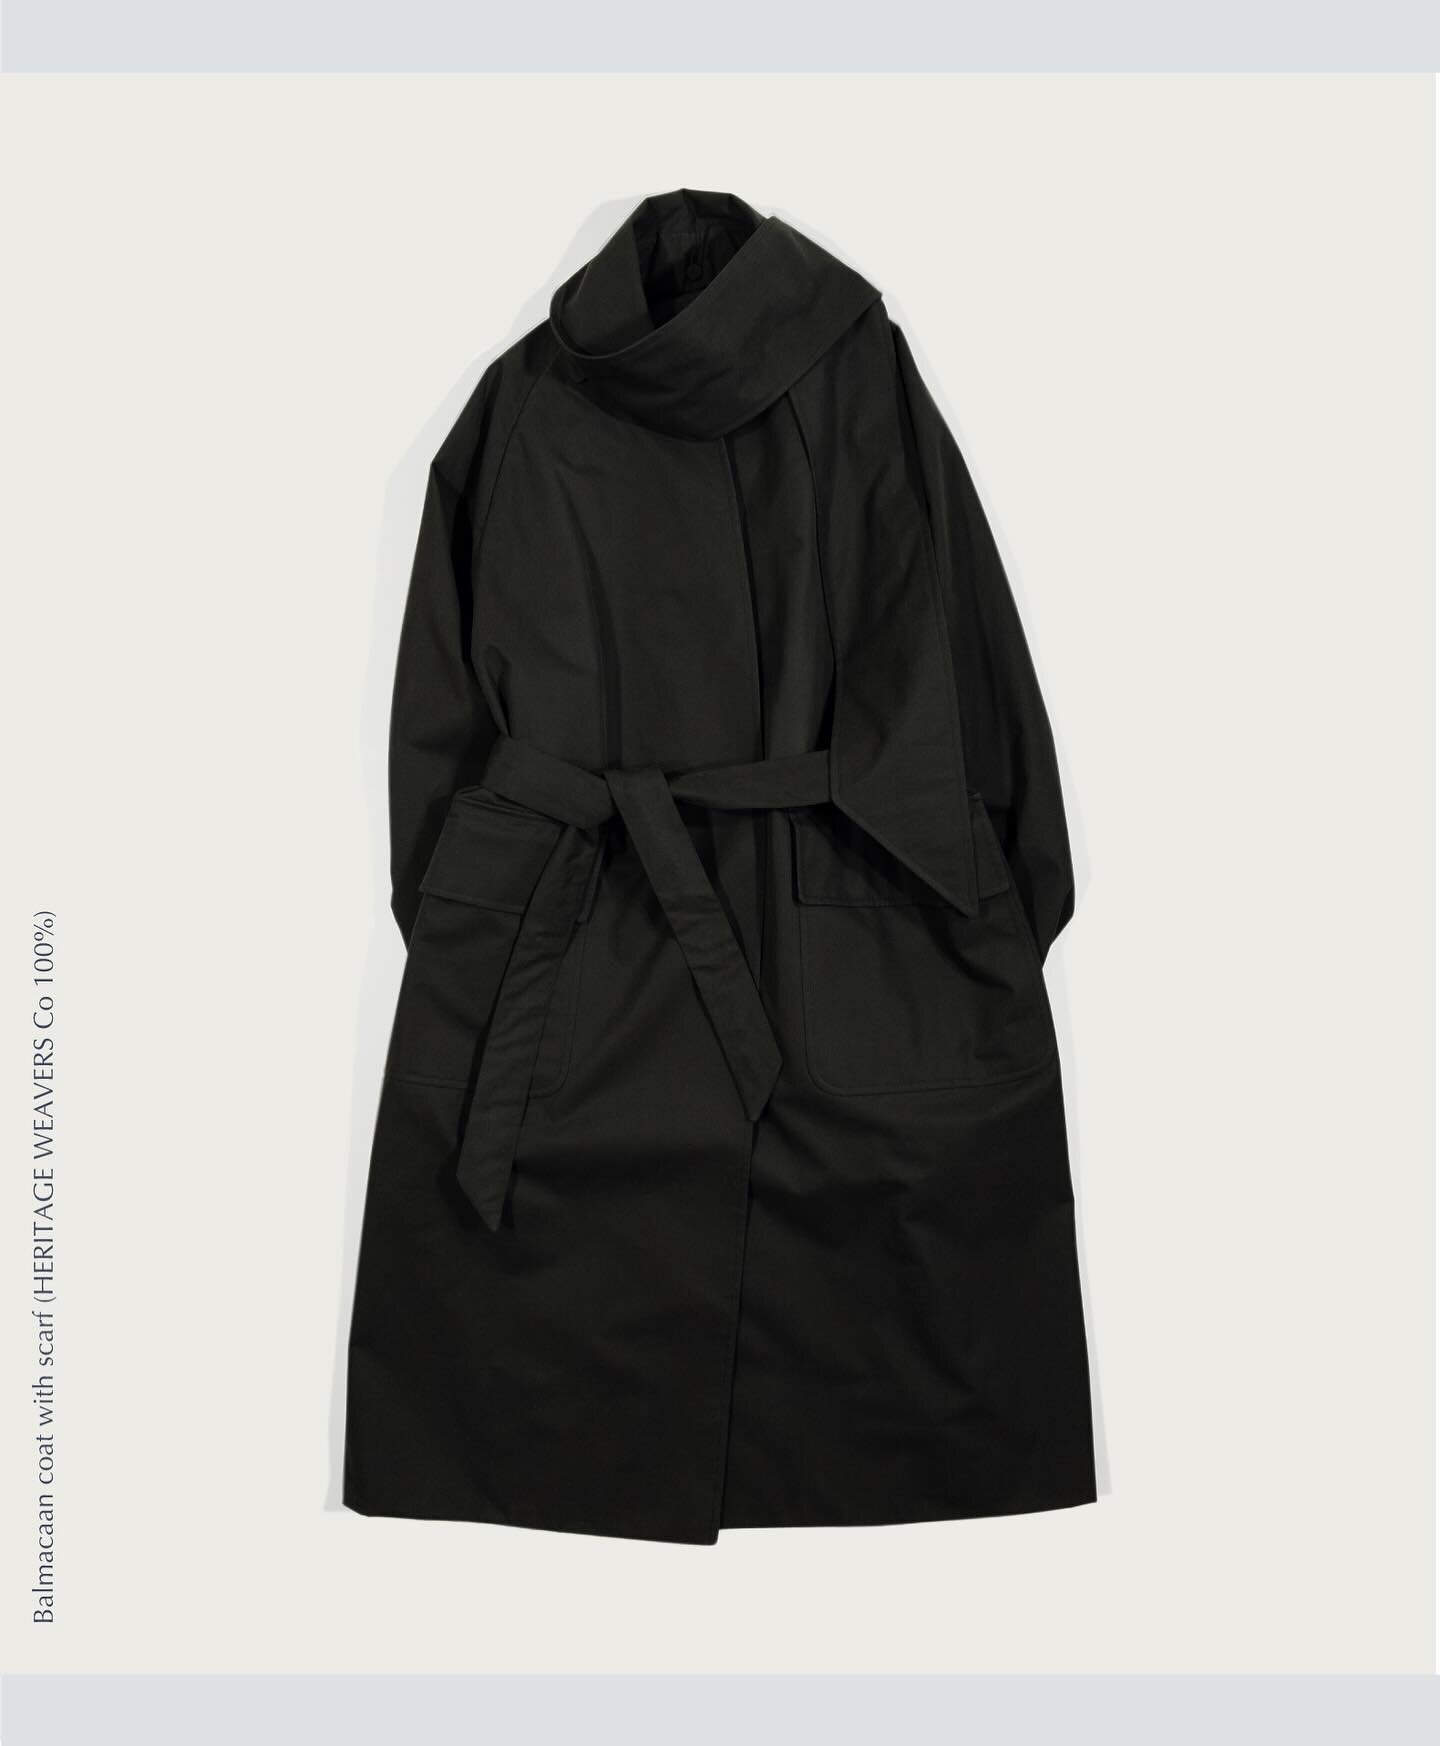 Balmacaan coat with scarf #yasutokimura #heritageweavers  #madetoorder #tailormade #unisexclothing #overcoat